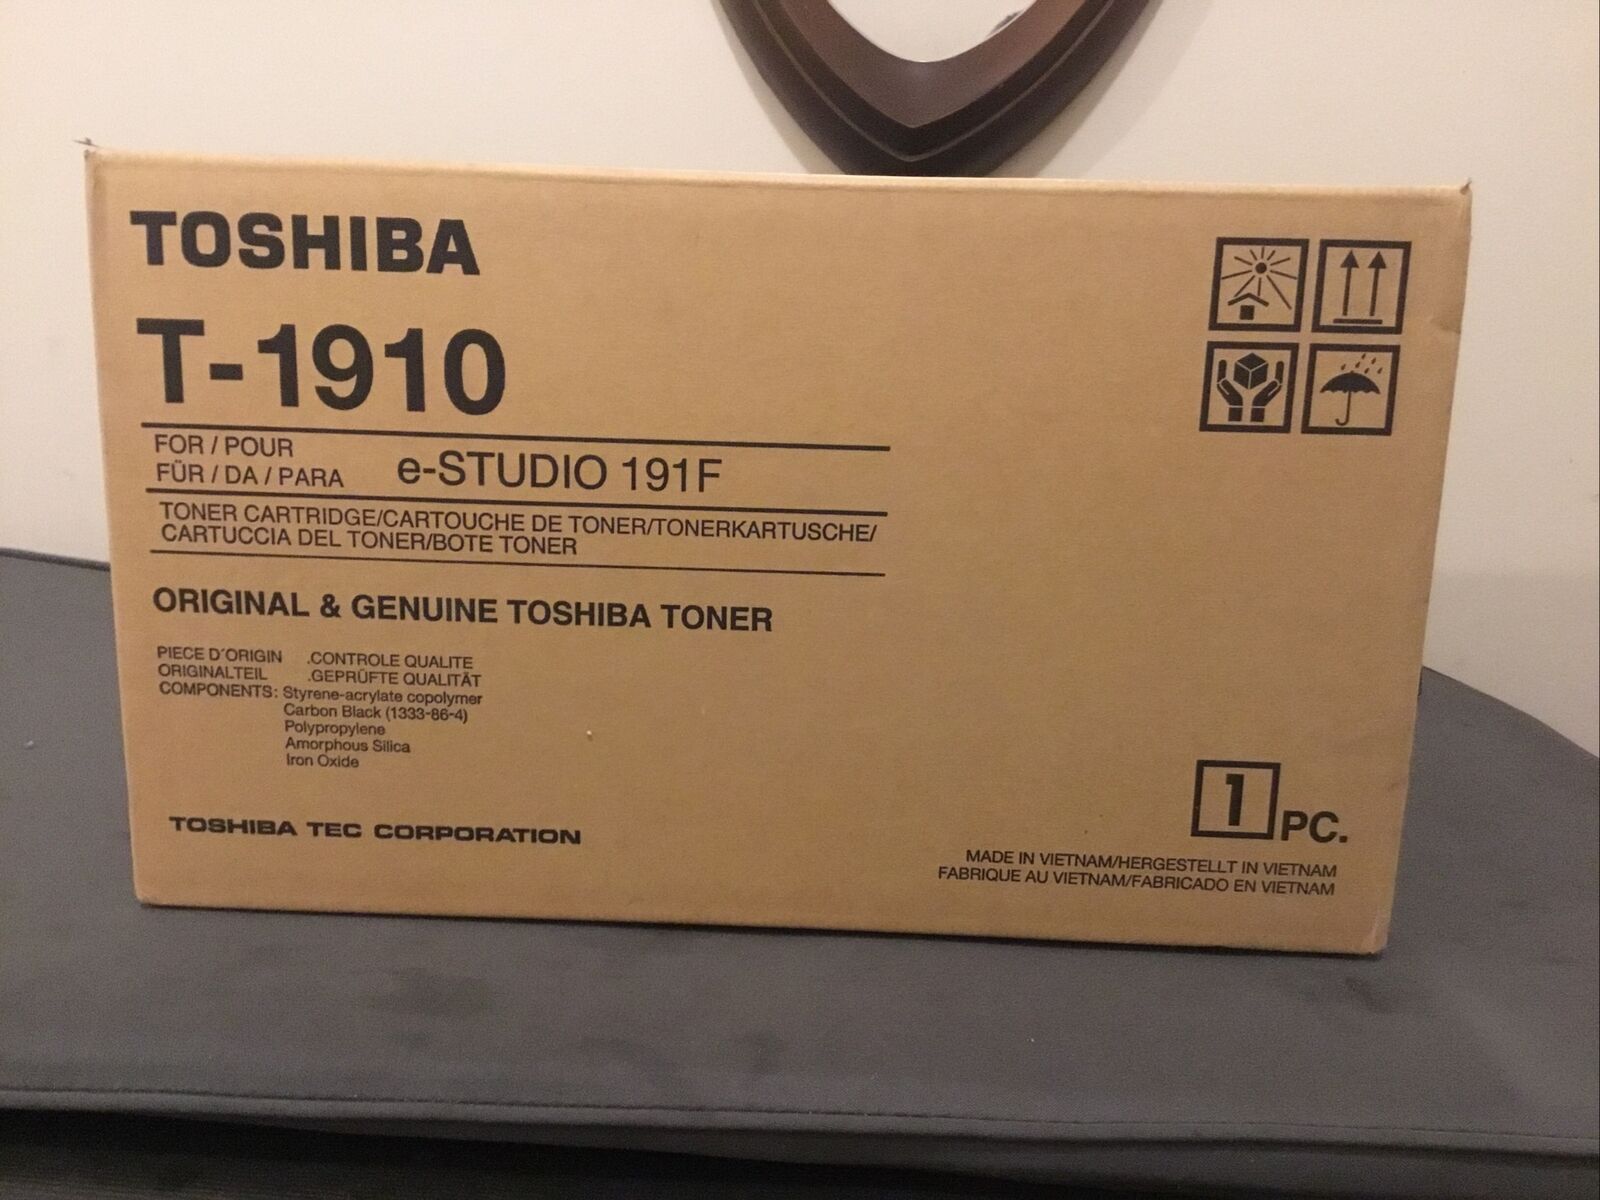 Toshiba Toner Cartridge T-1910, Black for Toshiba e-STUDIO 191f, New & Unopened